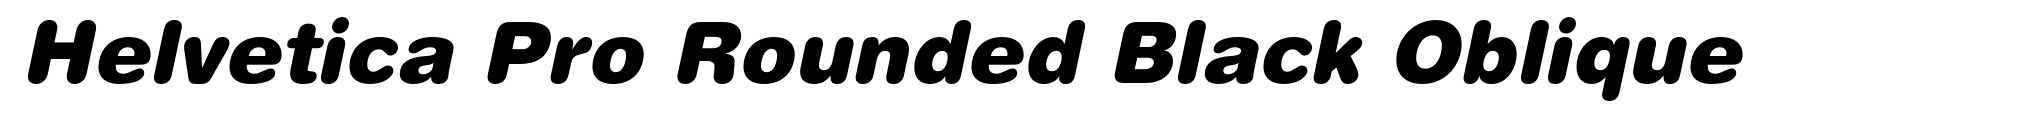 Helvetica Pro Rounded Black Oblique image